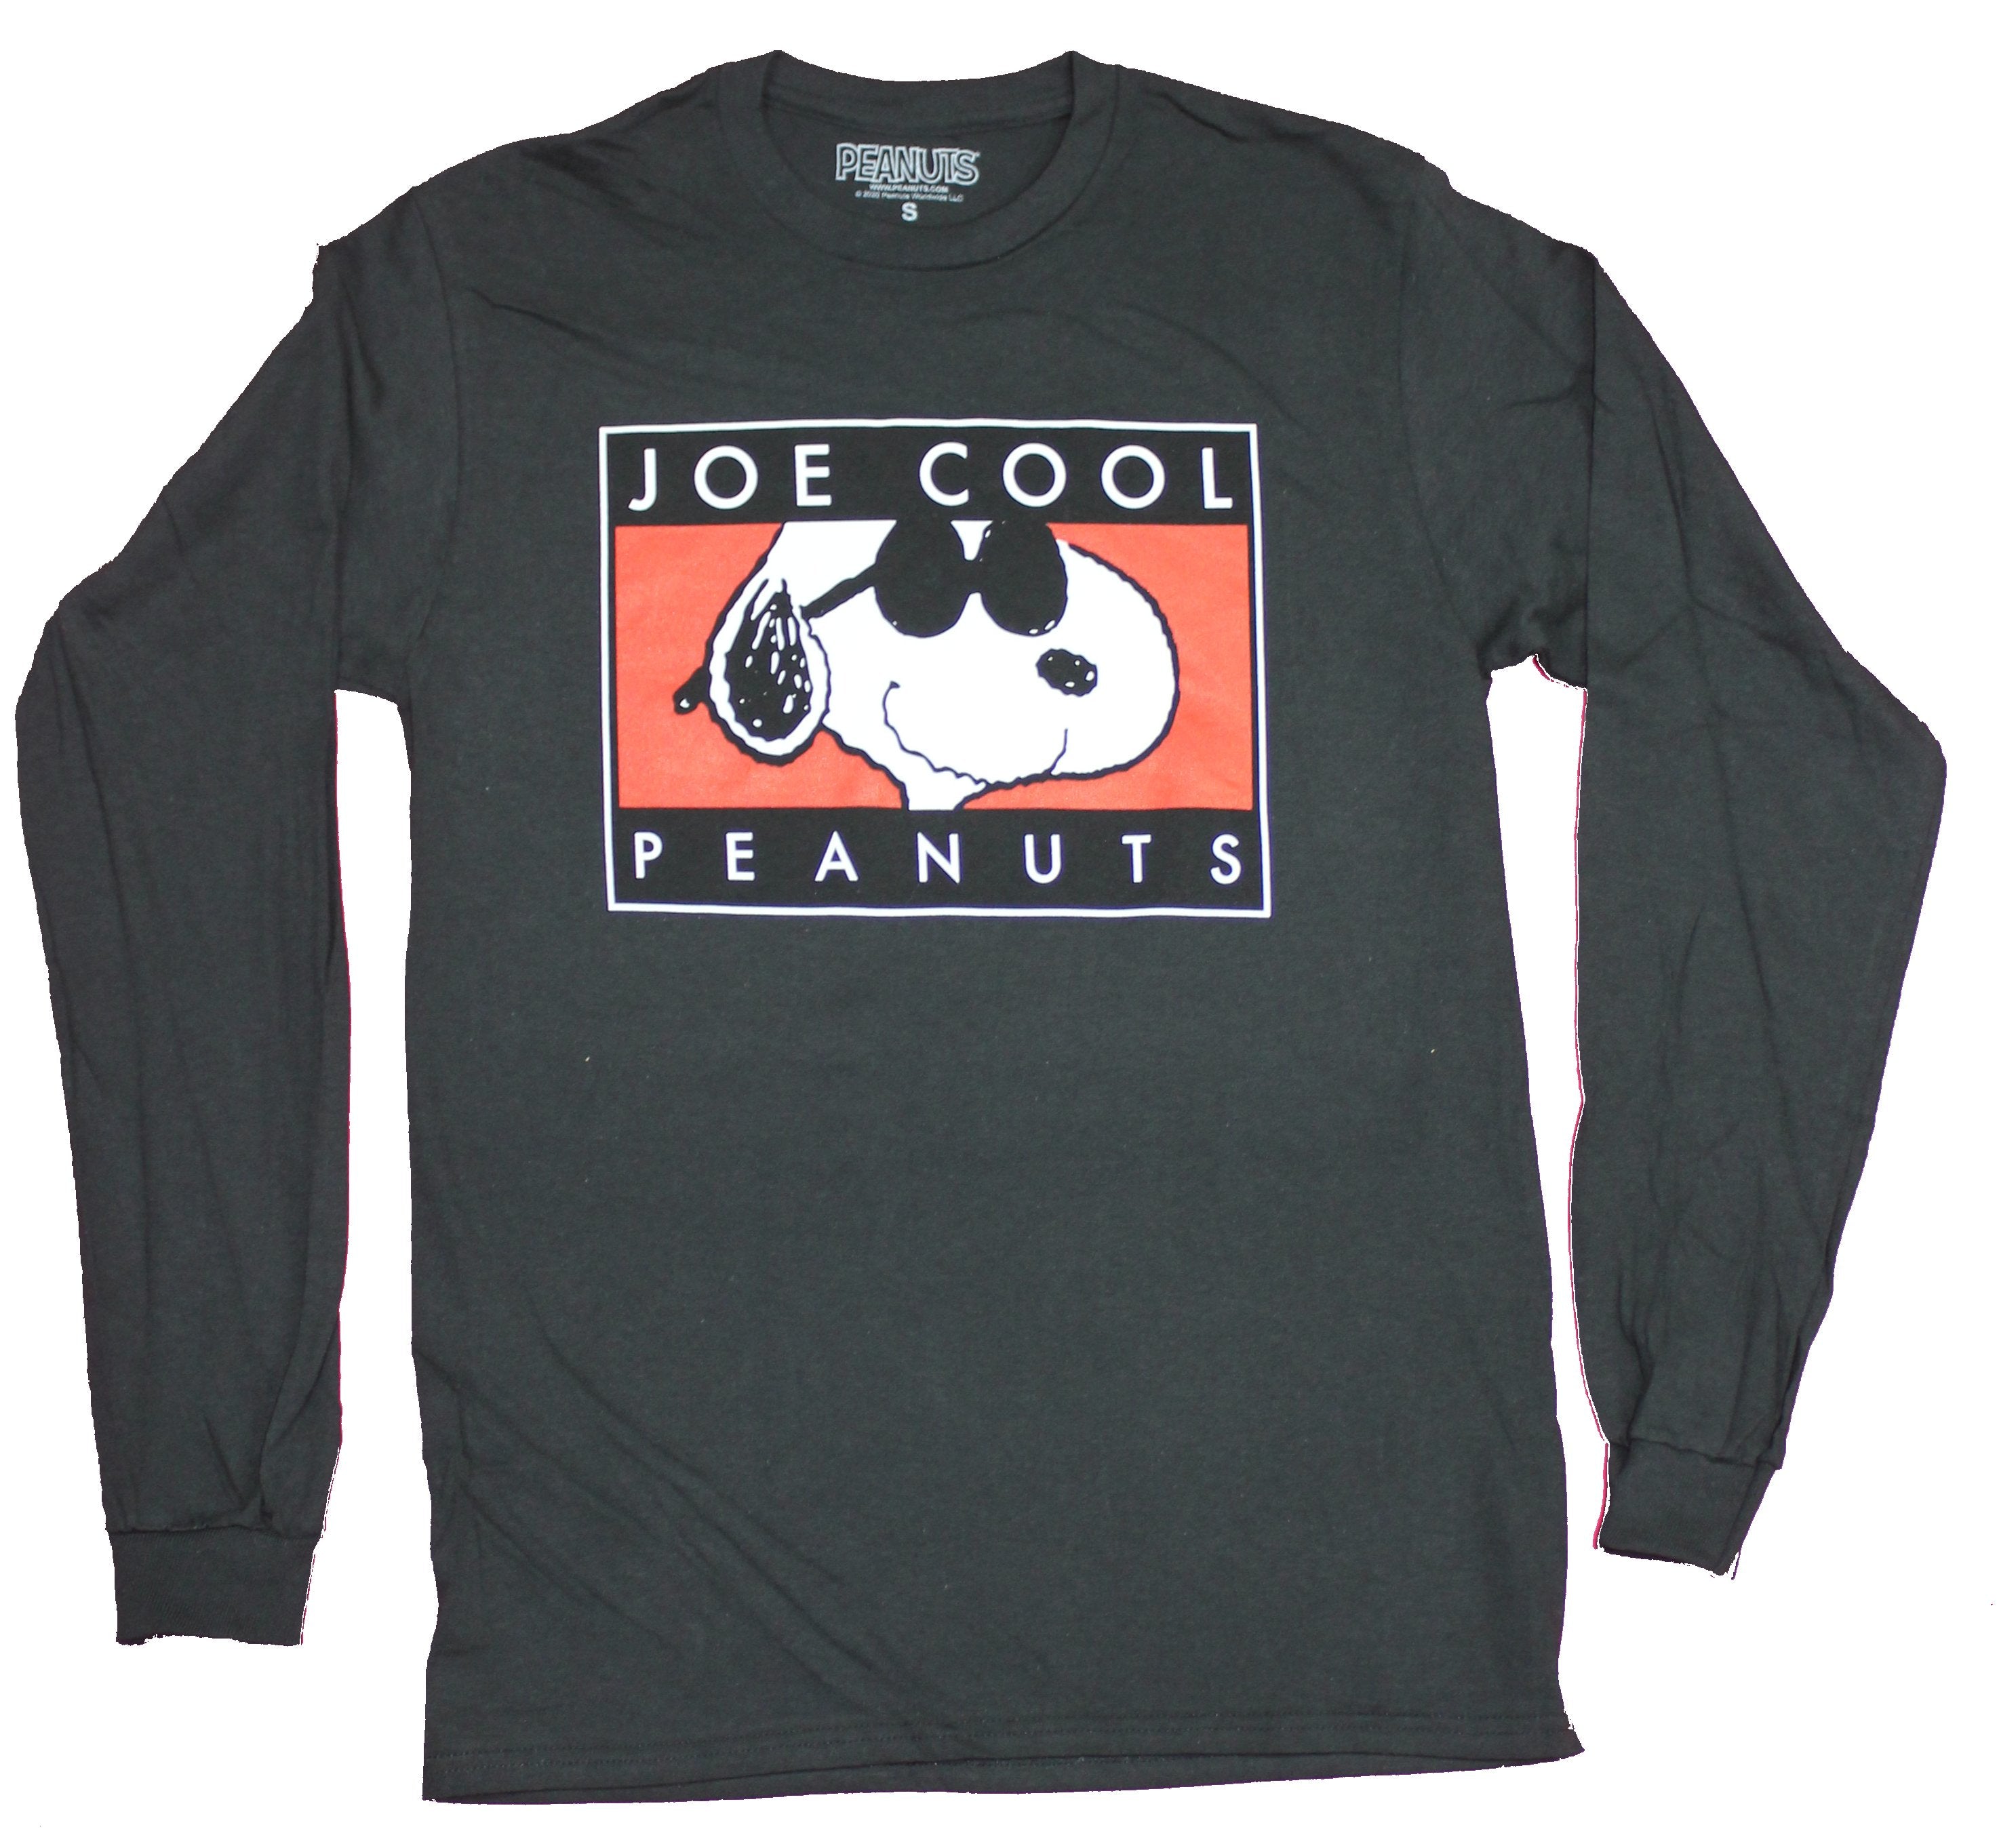 Peanuts Mens Long Sleeve T-Shirt  - Joe Cool Peanuts Snoopy Boxed